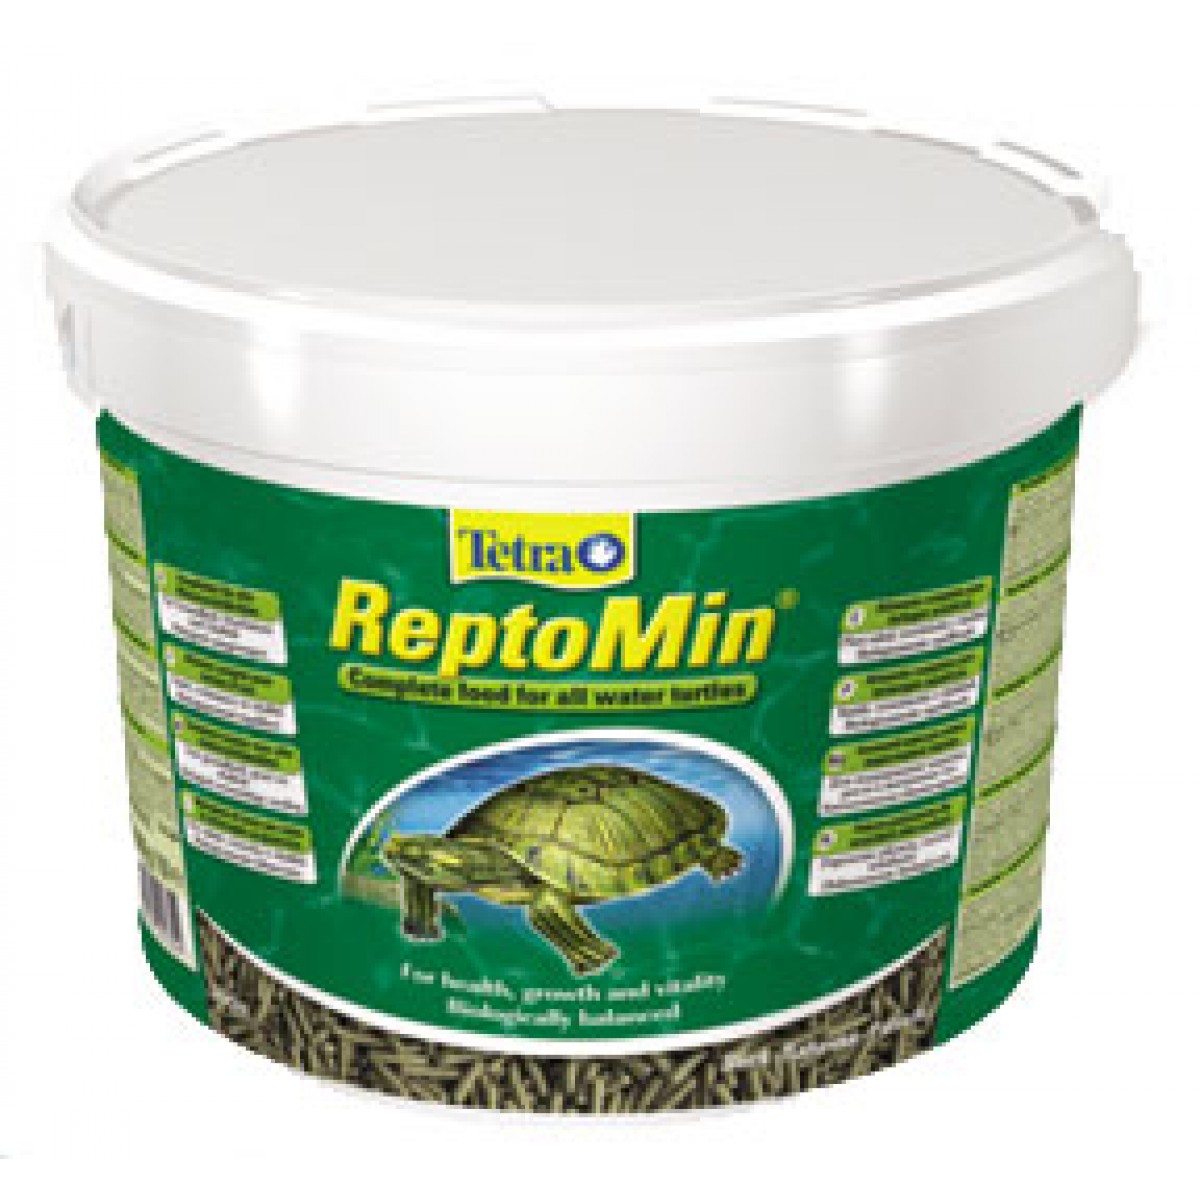 TETRA ReptoMin 10 L корм для водных черепах